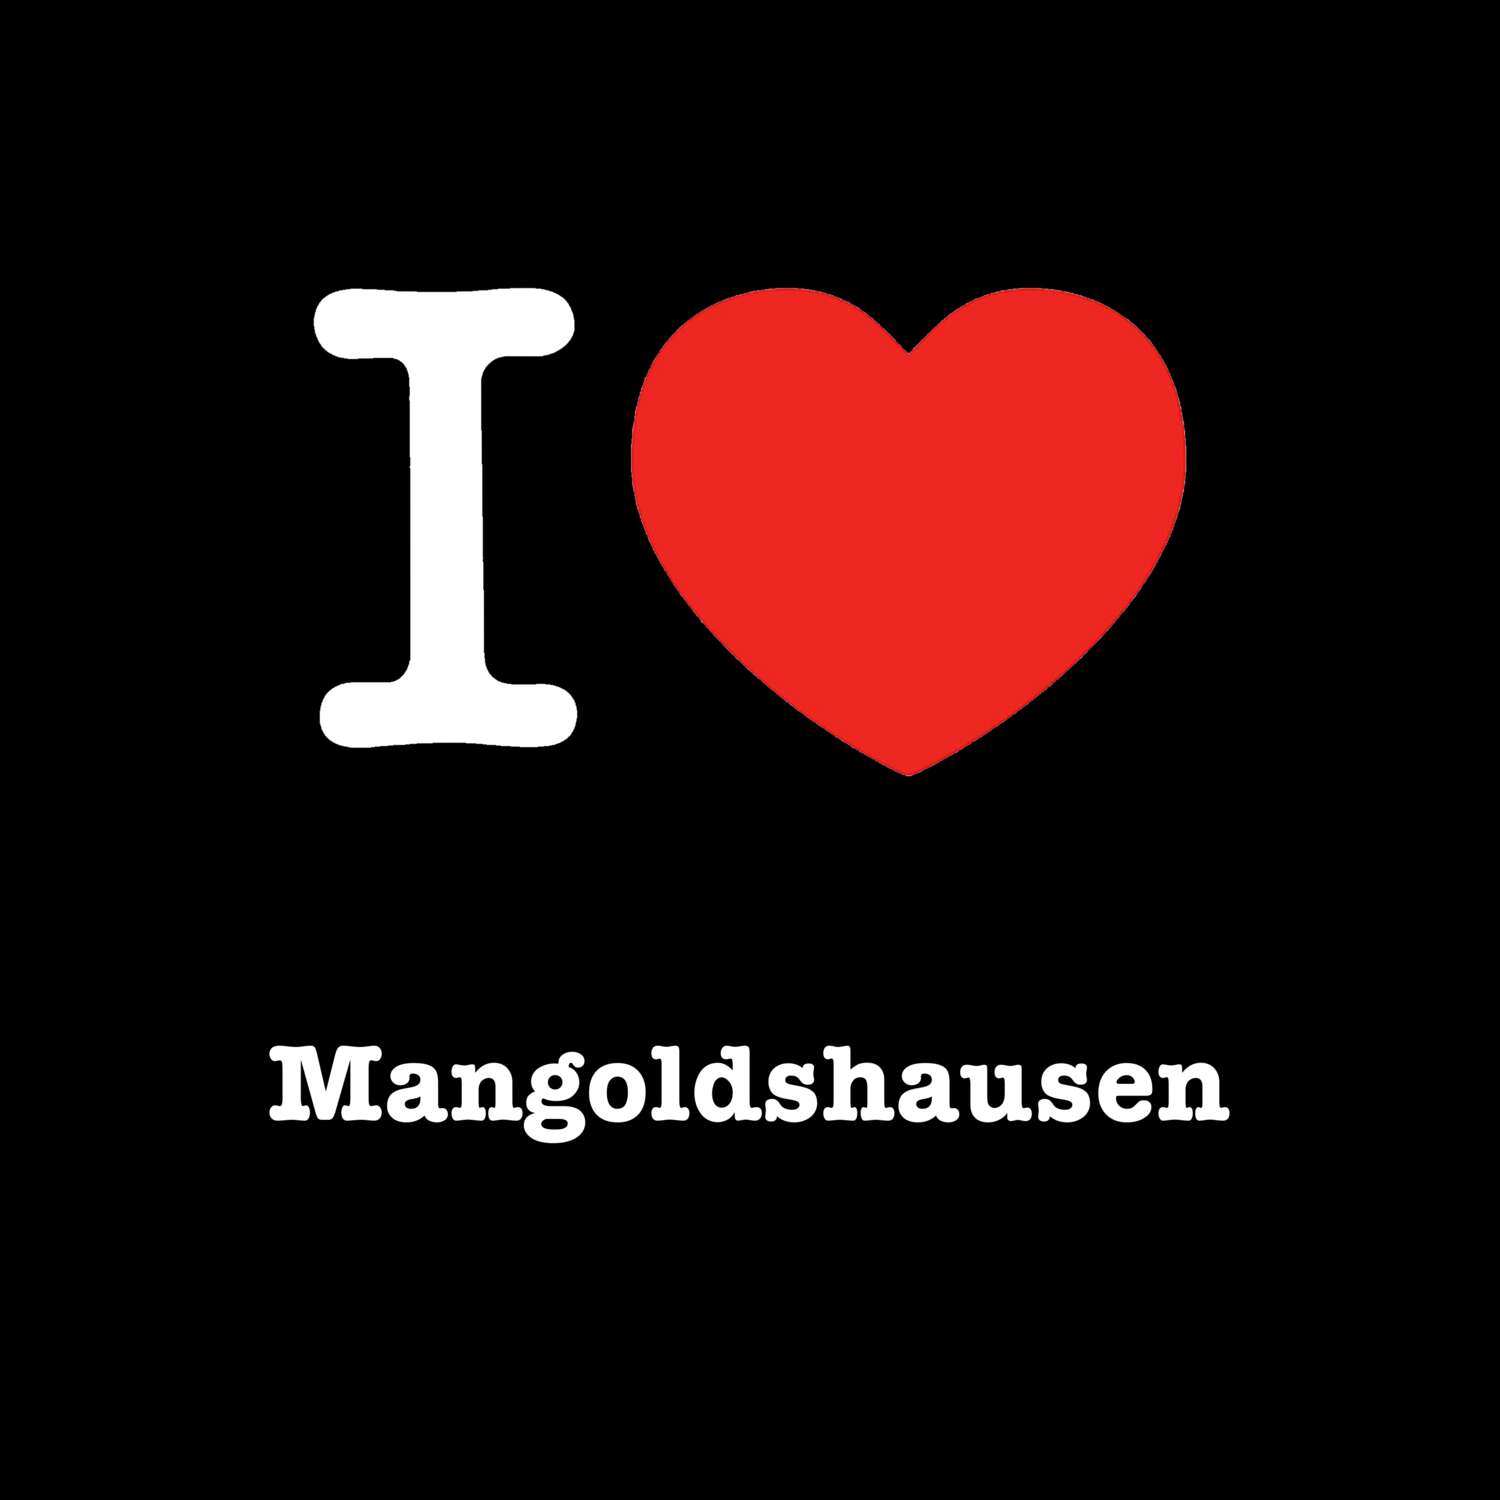 Mangoldshausen T-Shirt »I love«